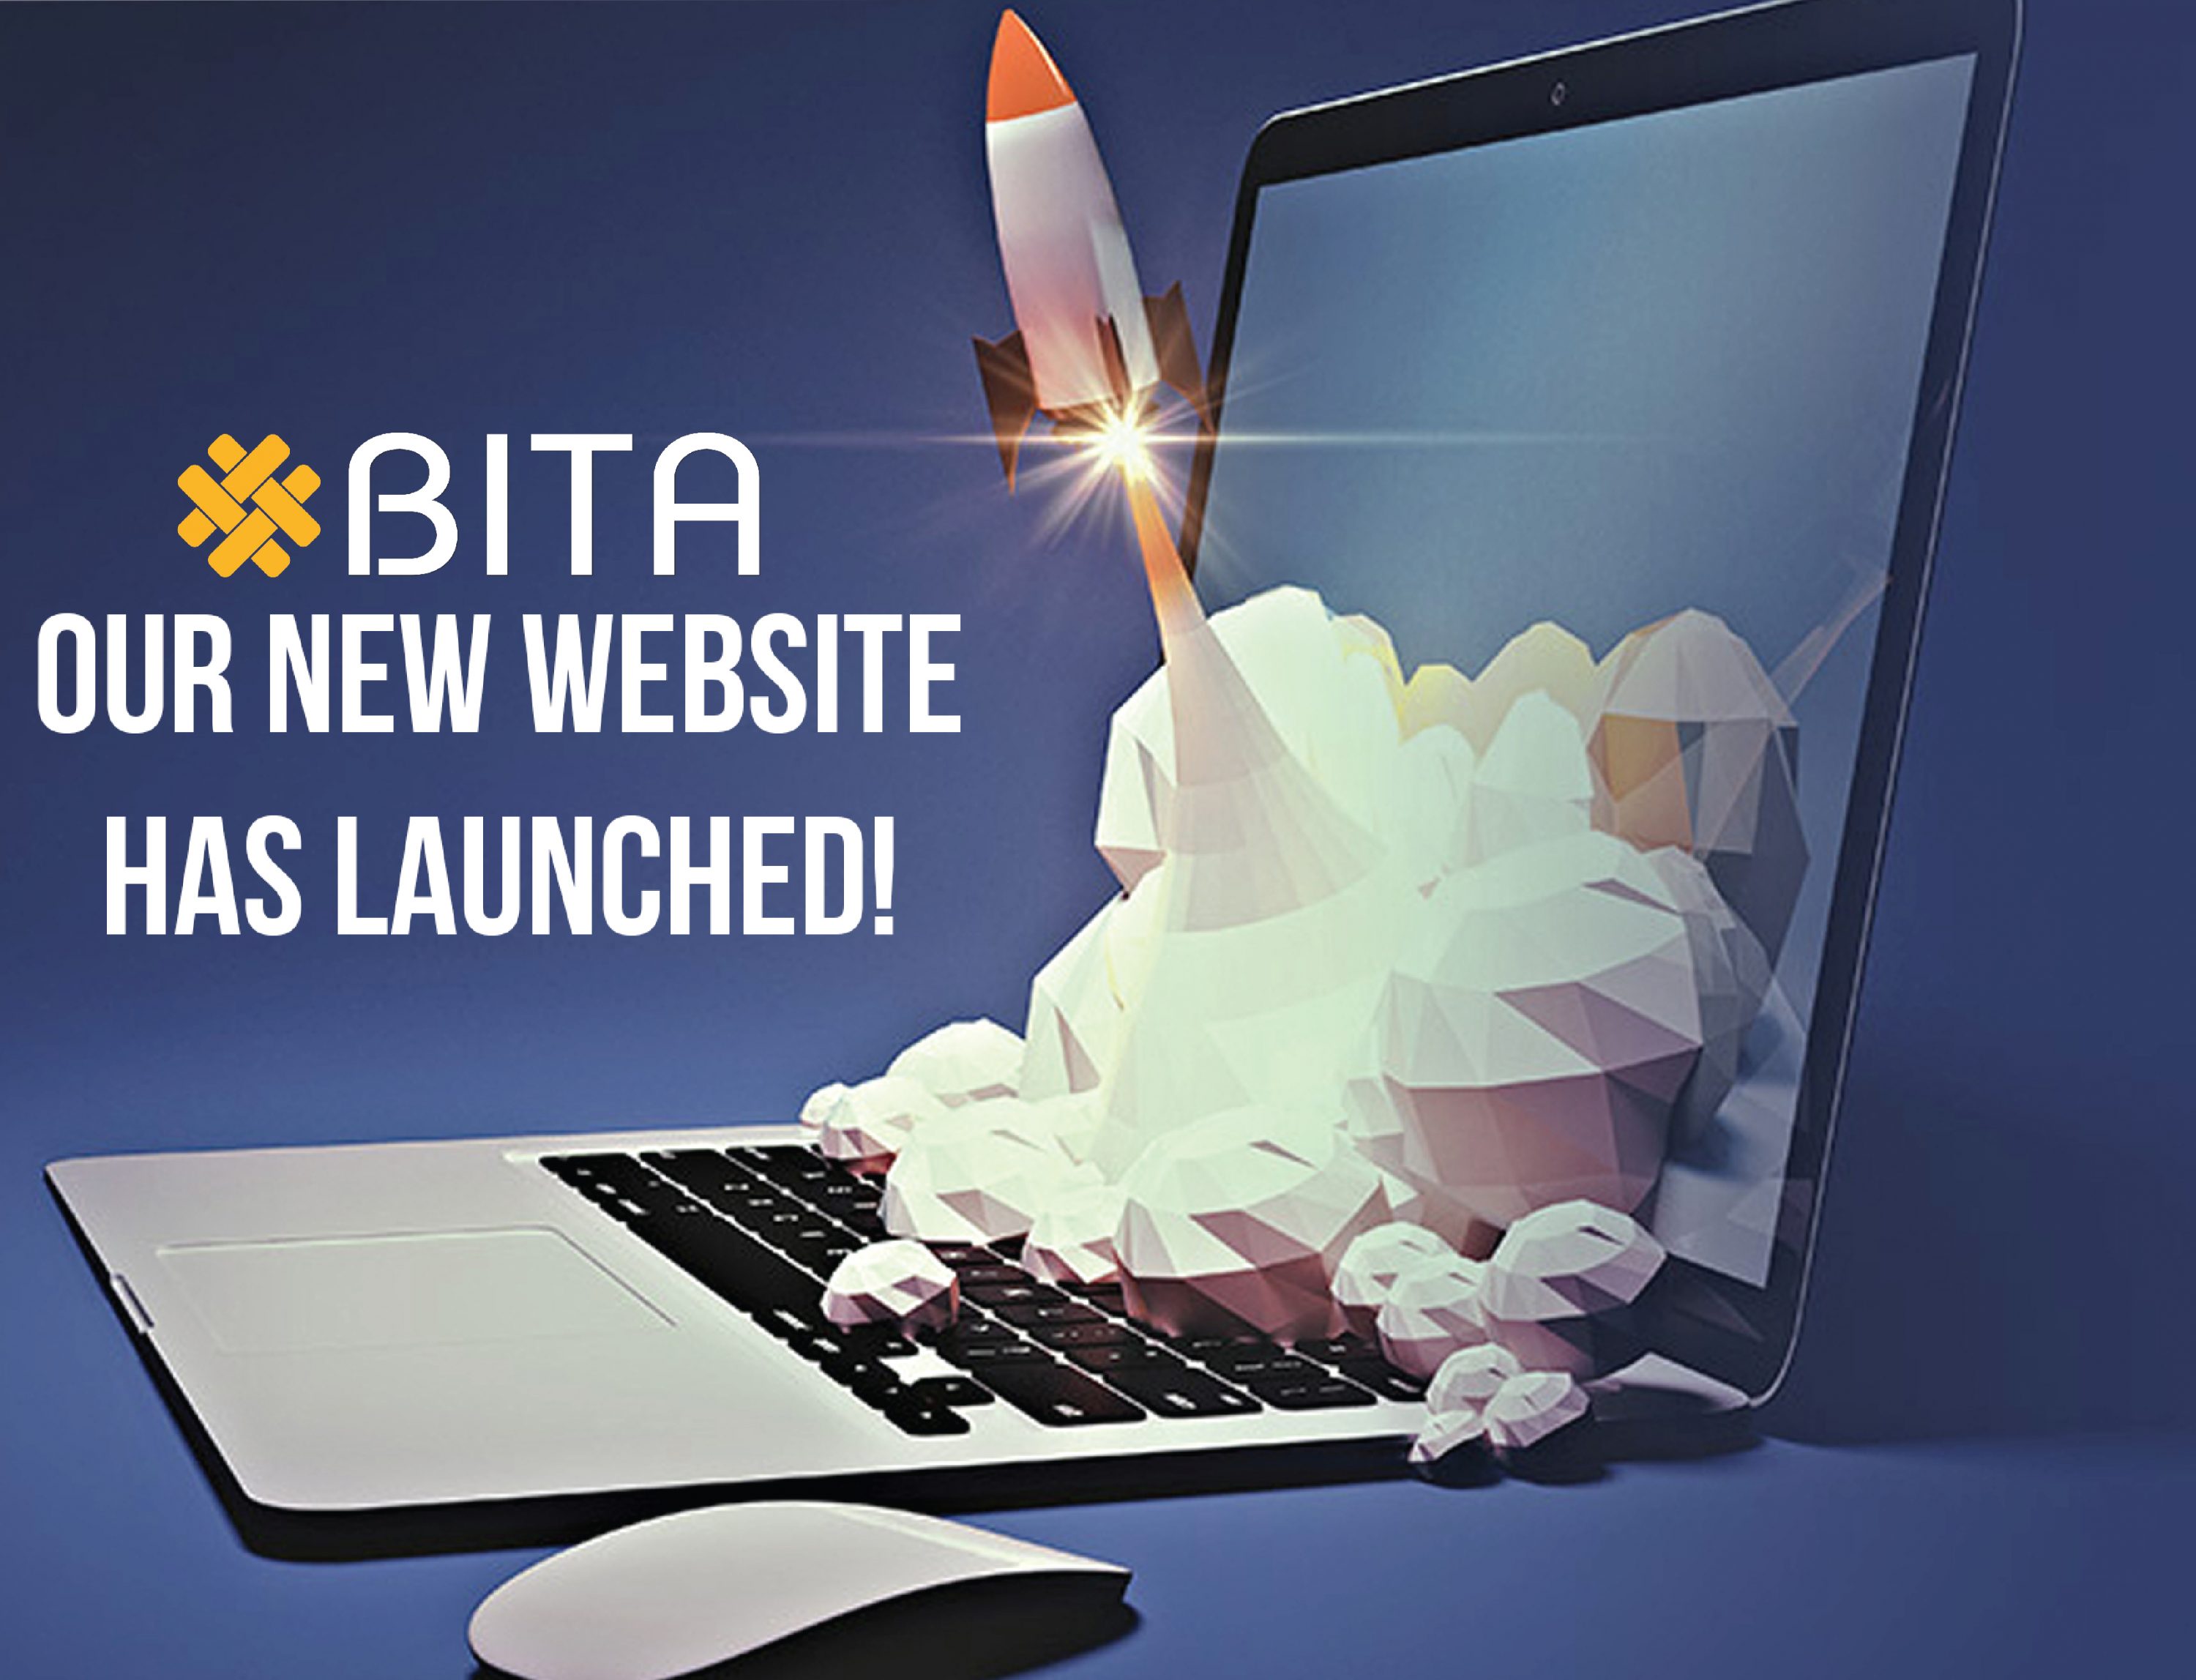 Launching new product. Ноутбук ракета. Product Launch. New website. Ракета вылетает из экрана телевизора.